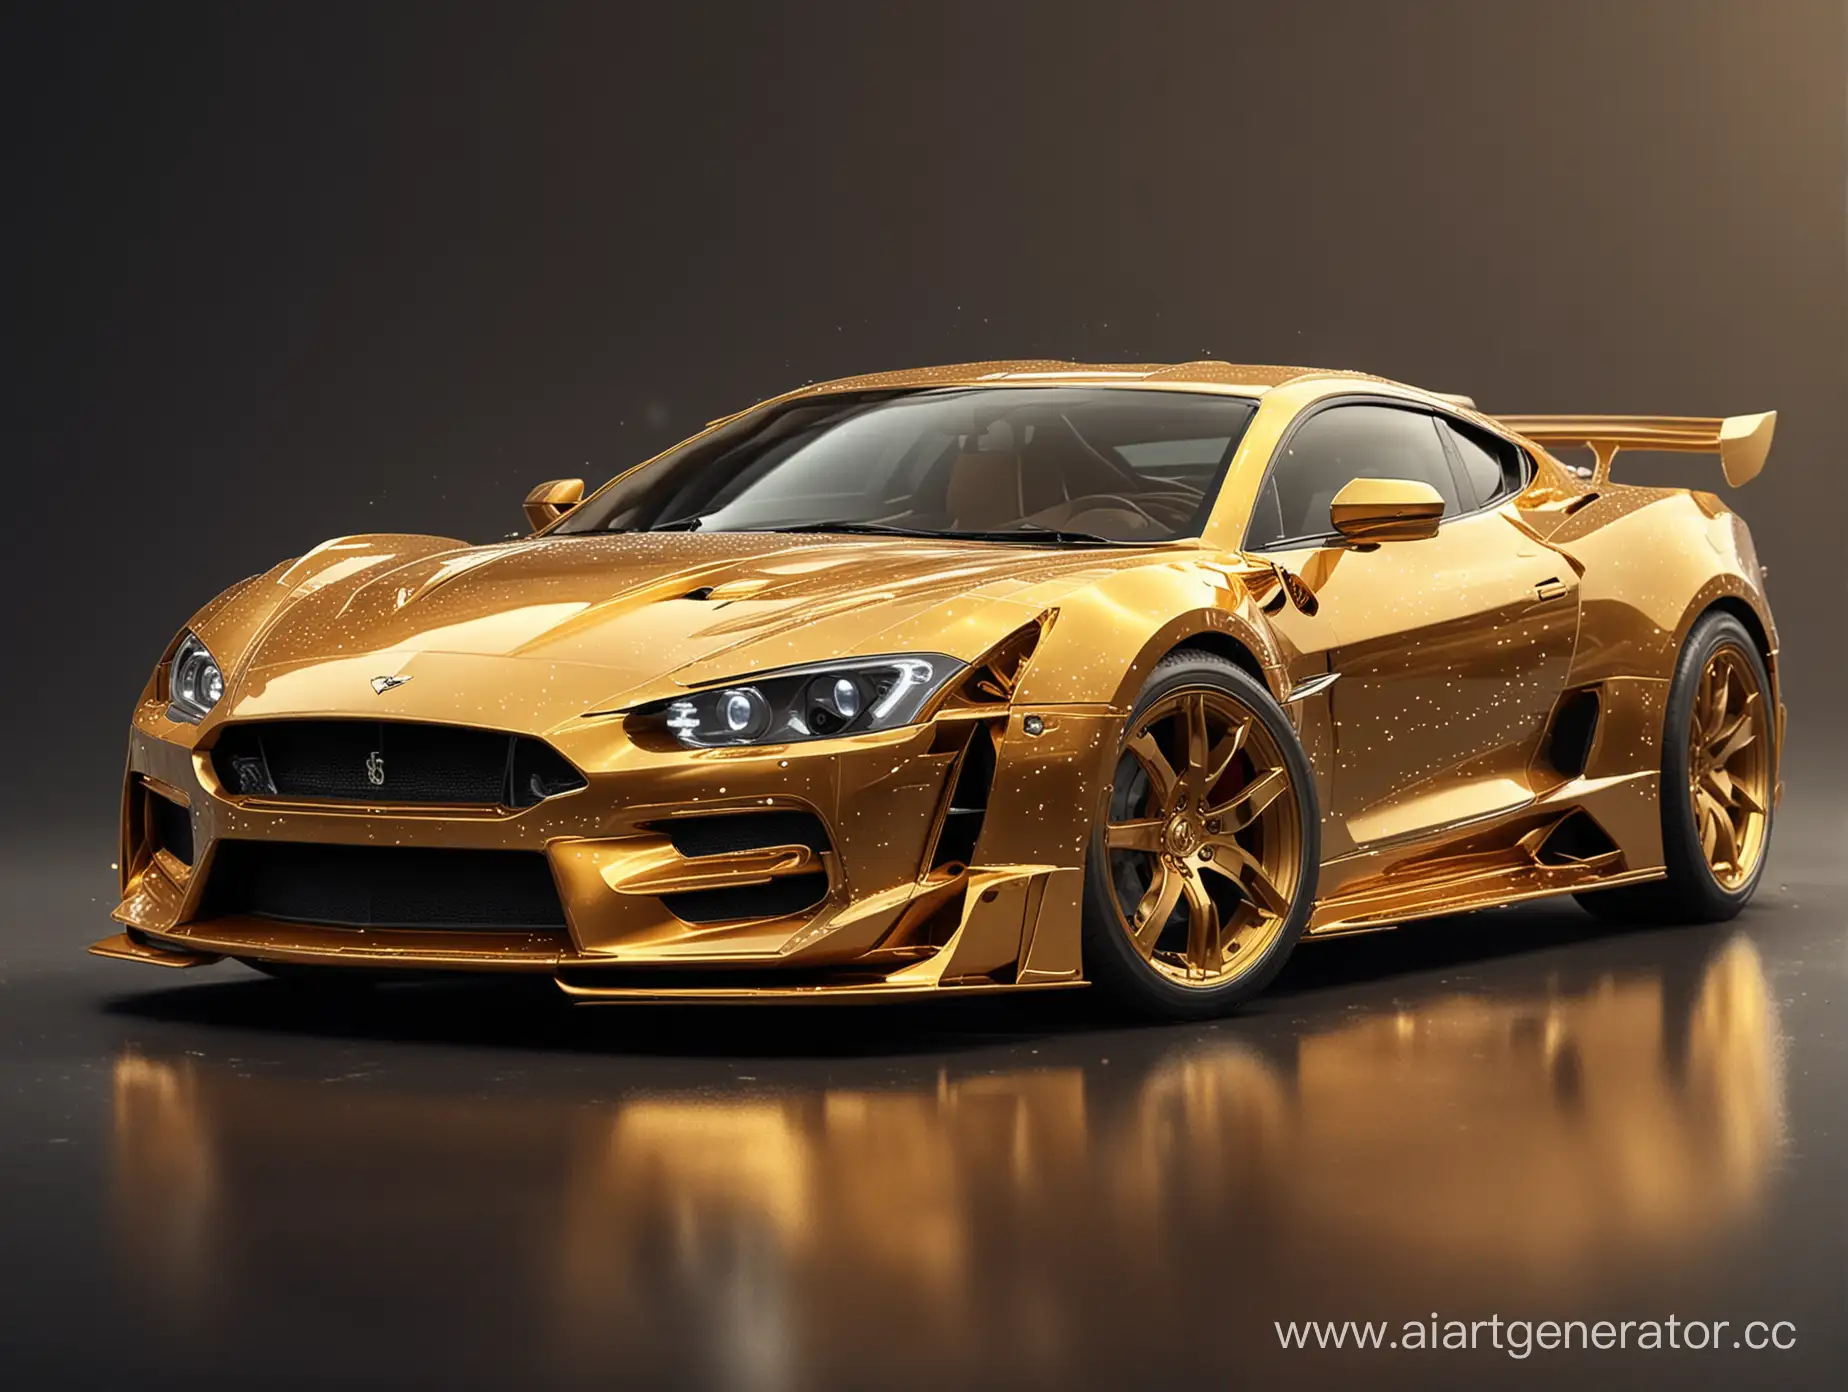 Luxurious-Golden-Sports-Car-in-a-Casino-Setting